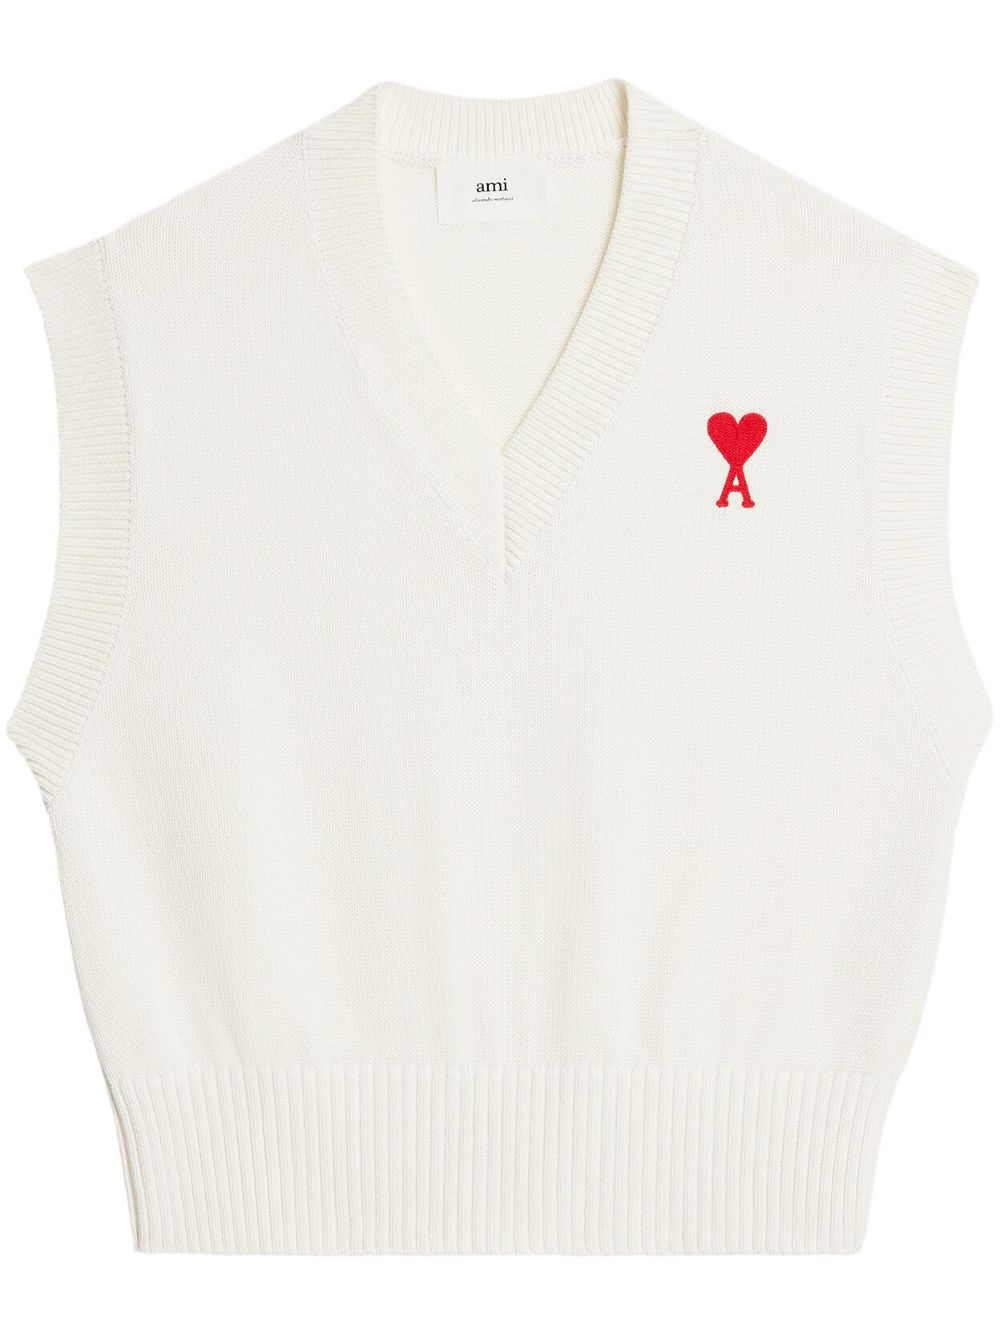 AMI Paris chest embroidered-logo knit vest - White von AMI Paris